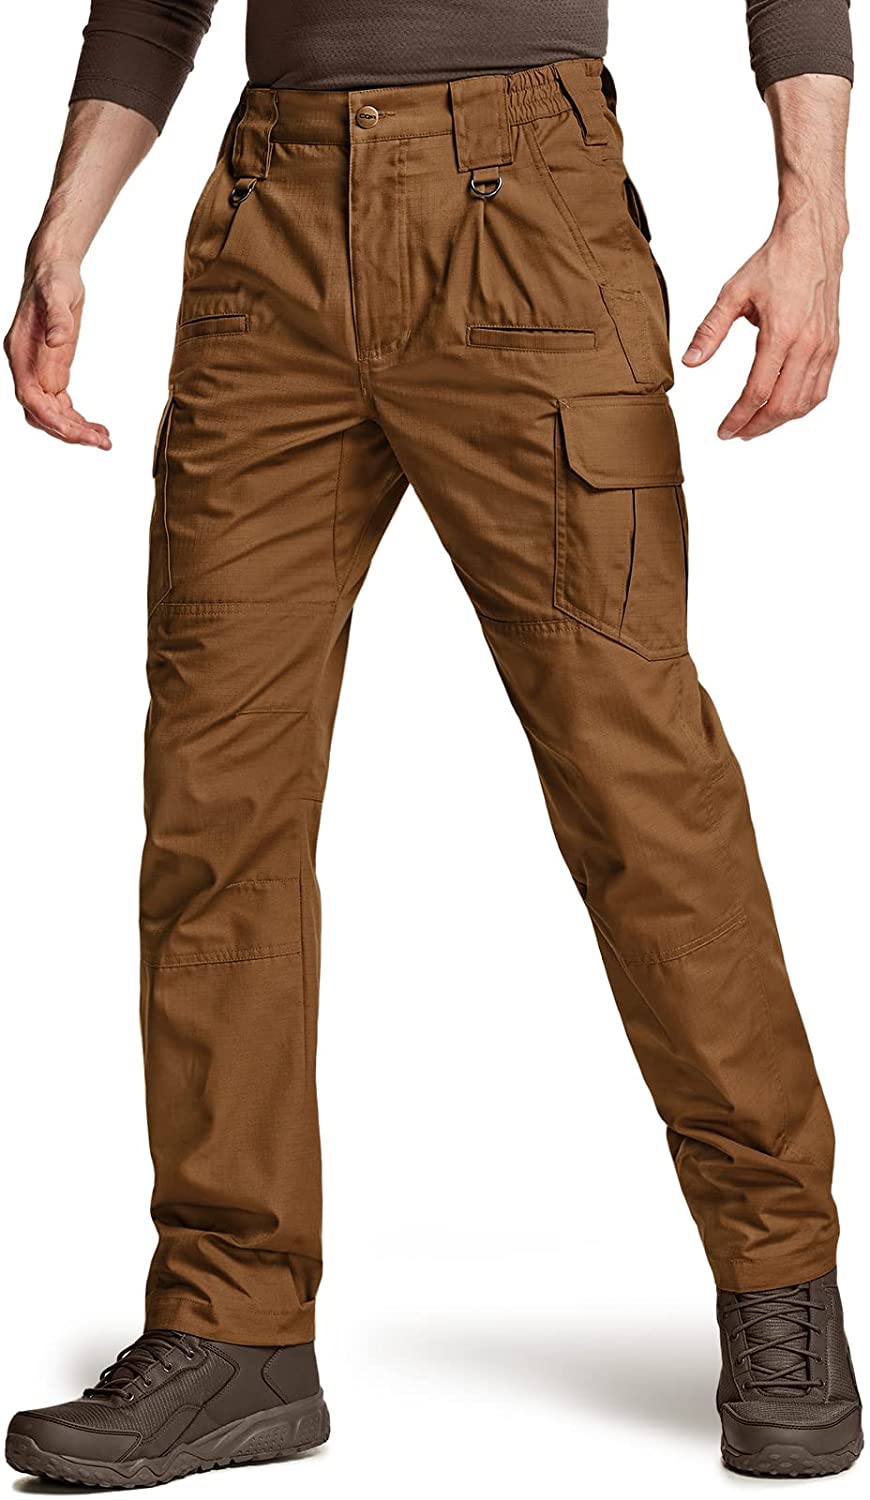 CQR Men's Tactical Pants, Water Repellent Ripstop Cargo Pants